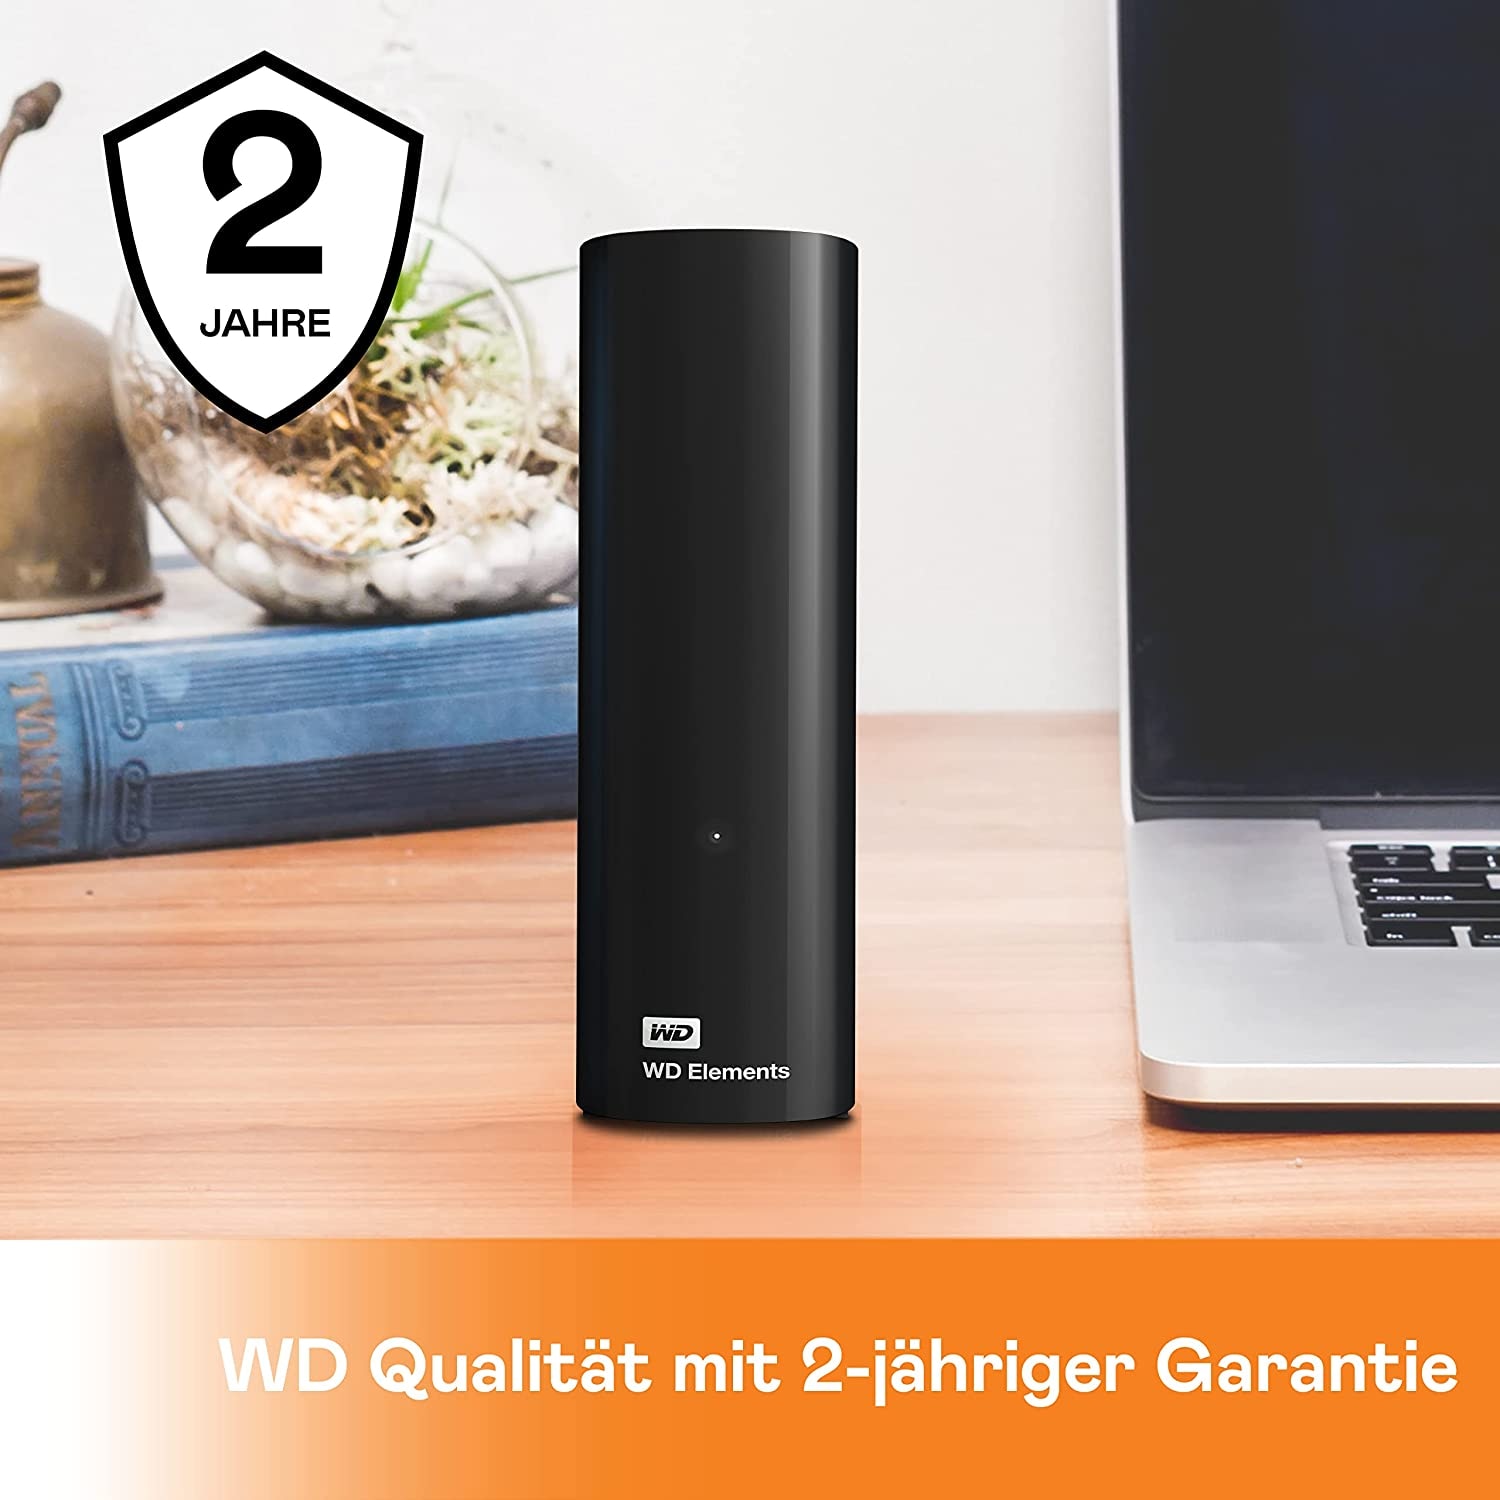 Western Digital externe HDD-Festplatte »WD Elements Desktop 3.0«, Anschluss USB 3.0